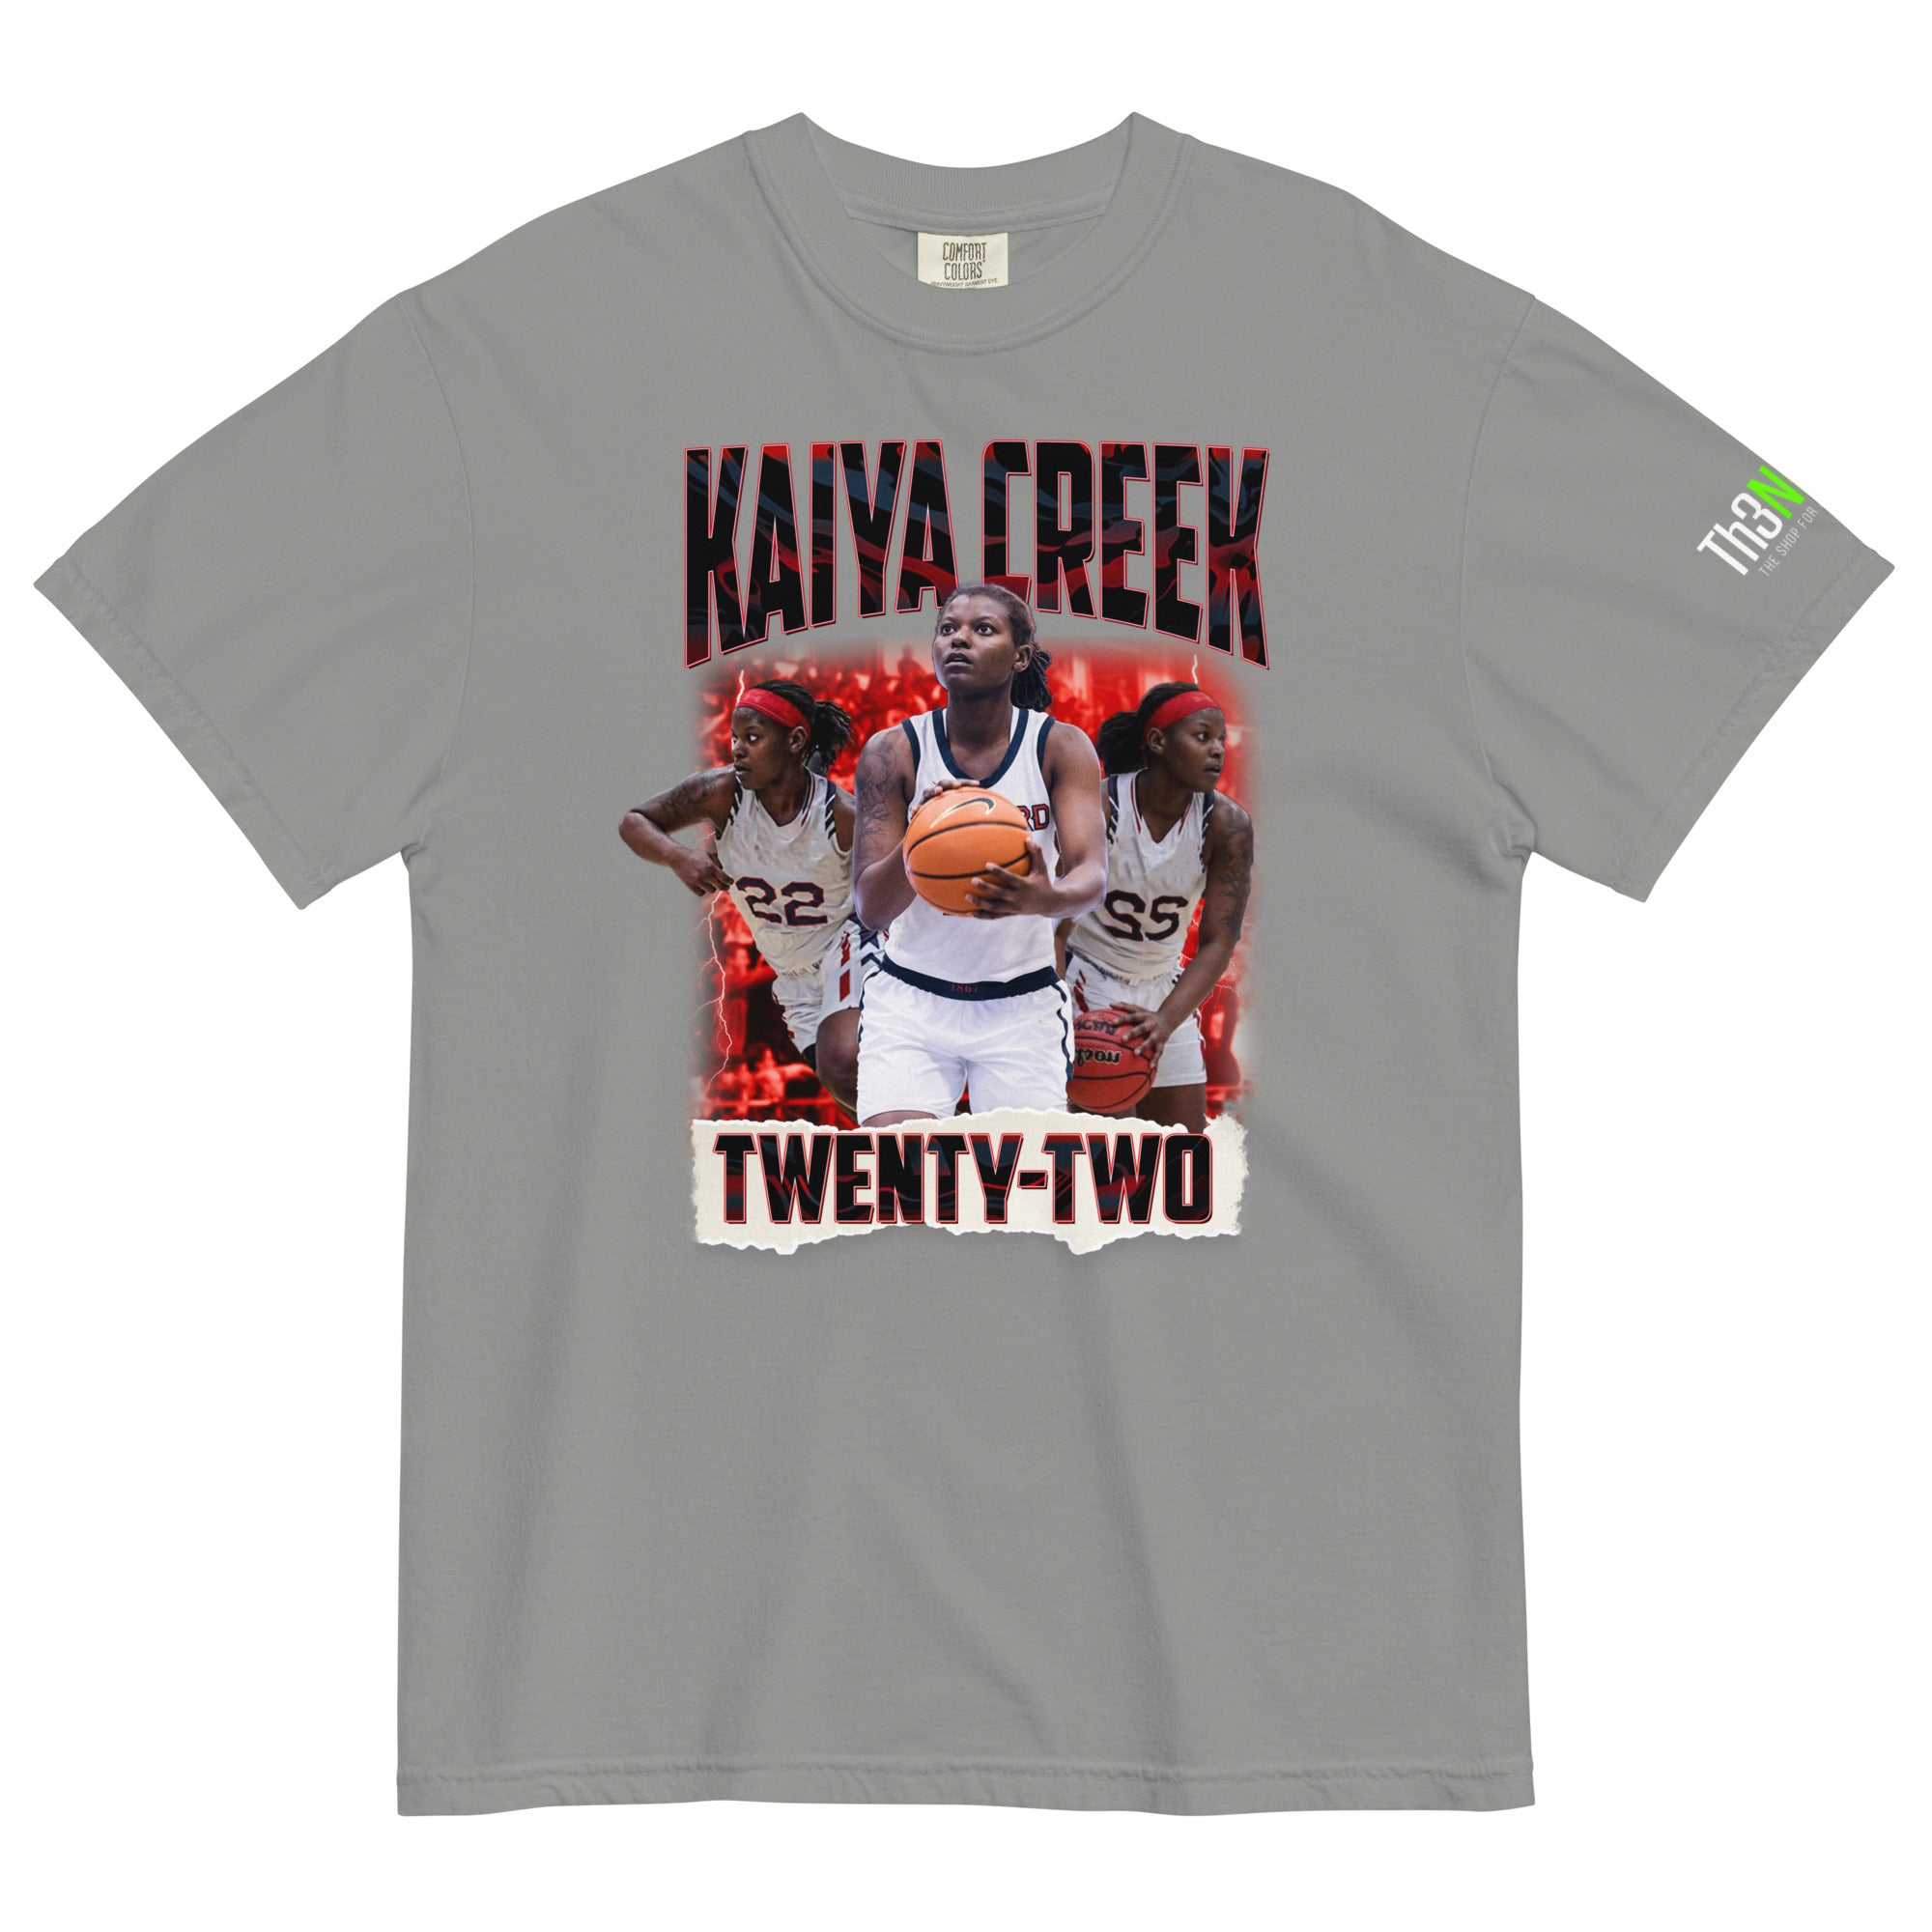 Kaiya Creek Twenty2 Tee